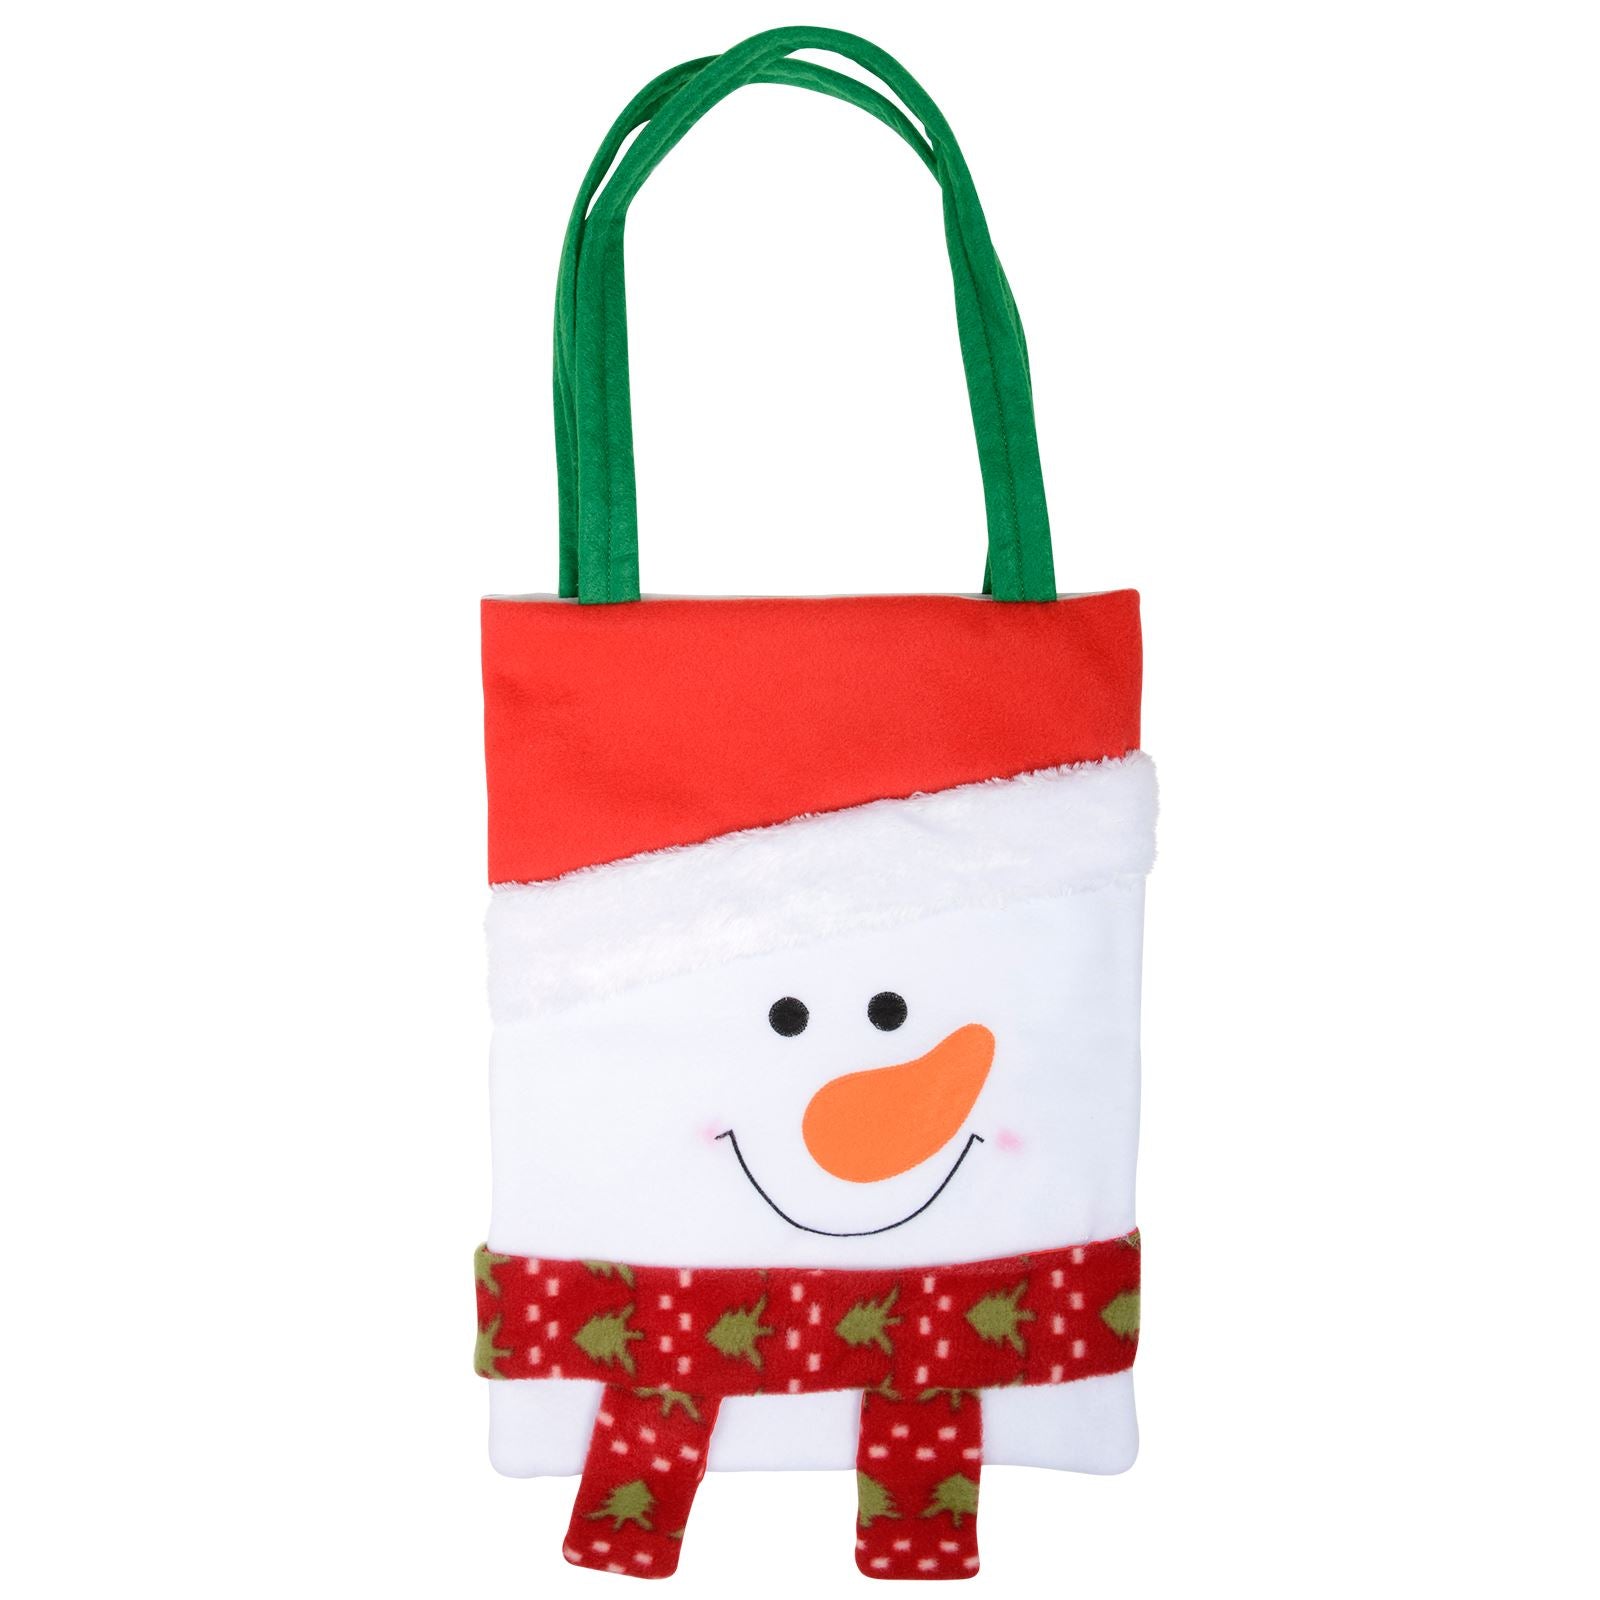 Mr Crimbo Felt Novelty Snowman Christmas Gift Bag With Scarf - MrCrimbo.co.uk -XS3703 - -christmas gift bag